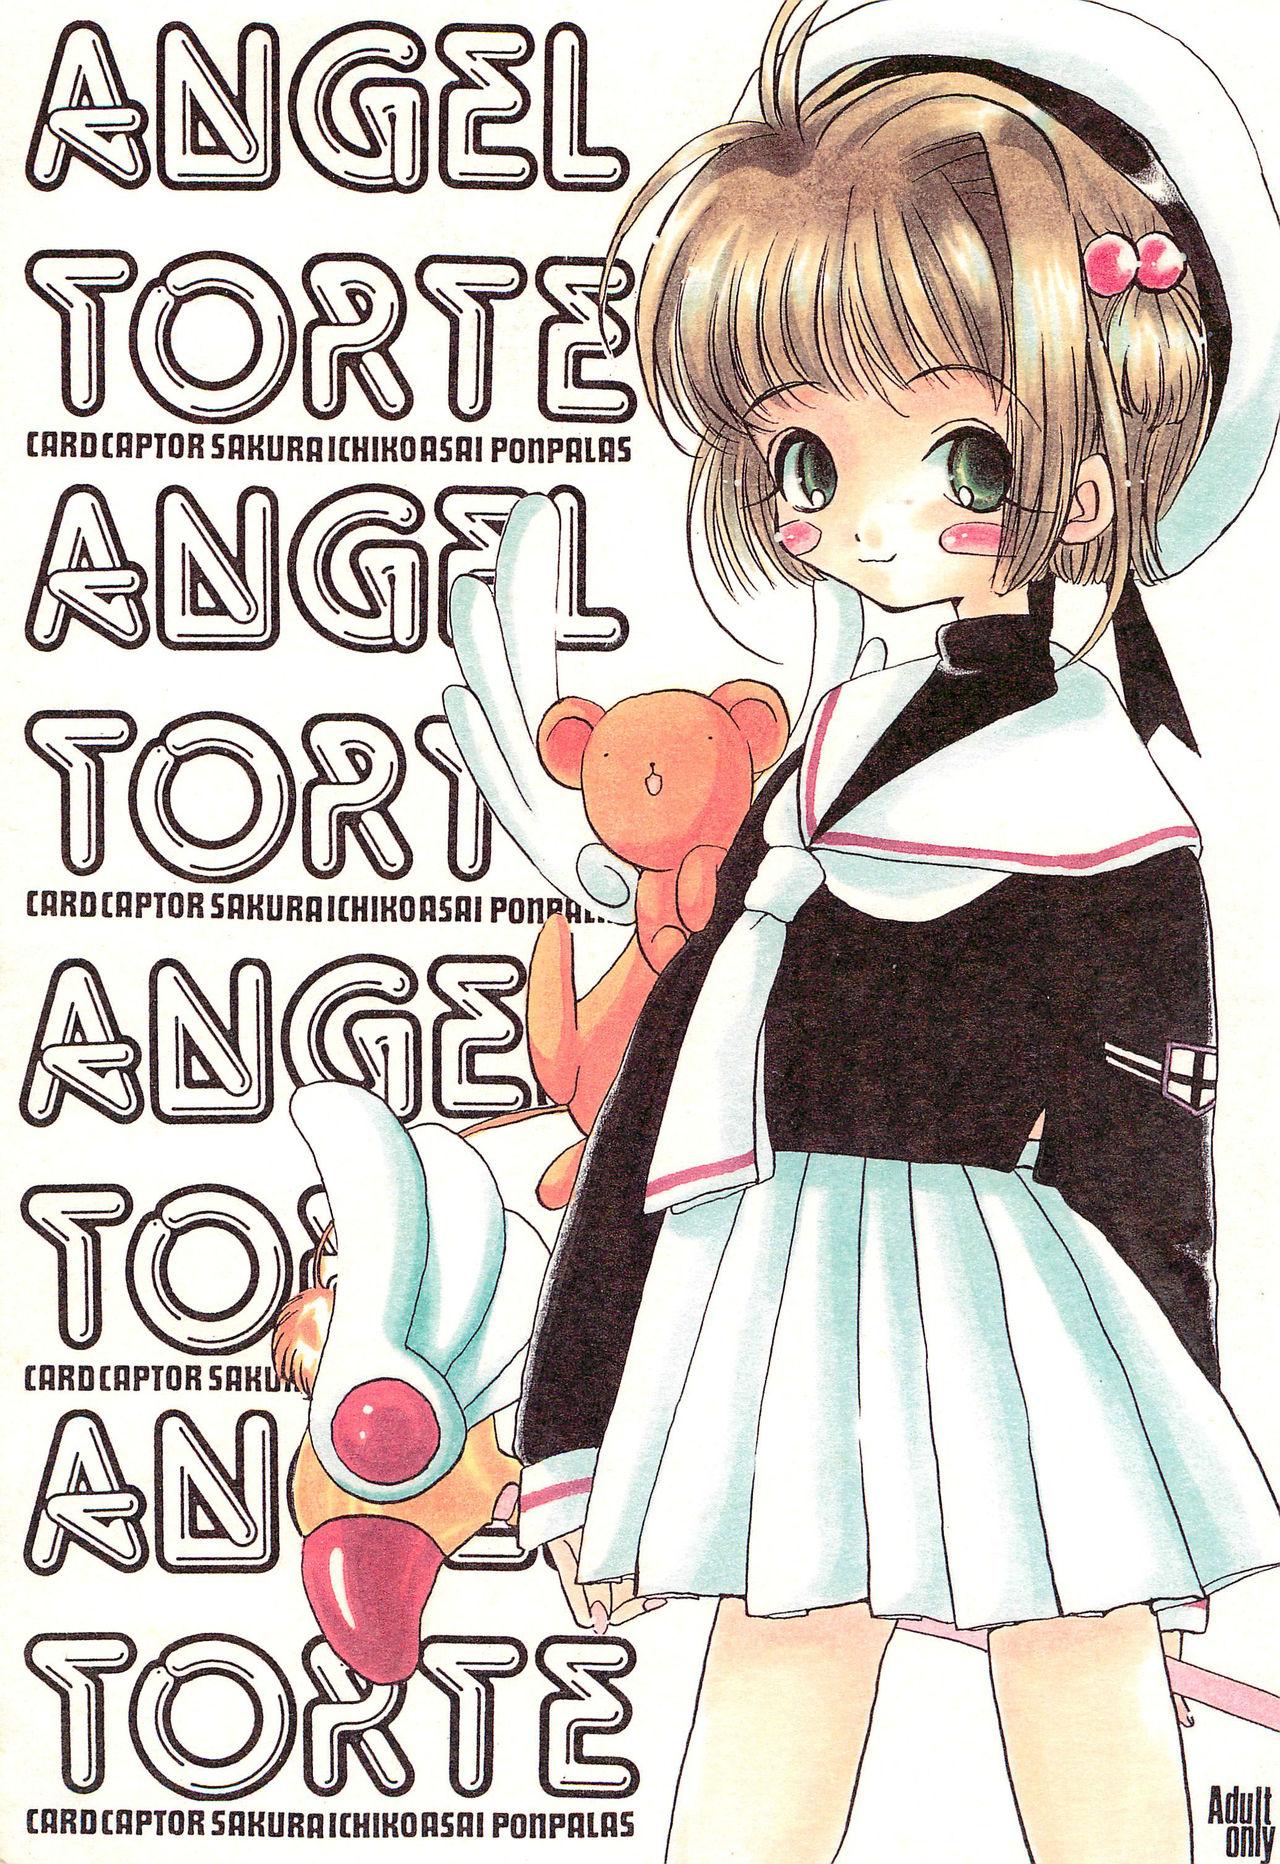 ANGEL TORTE 0